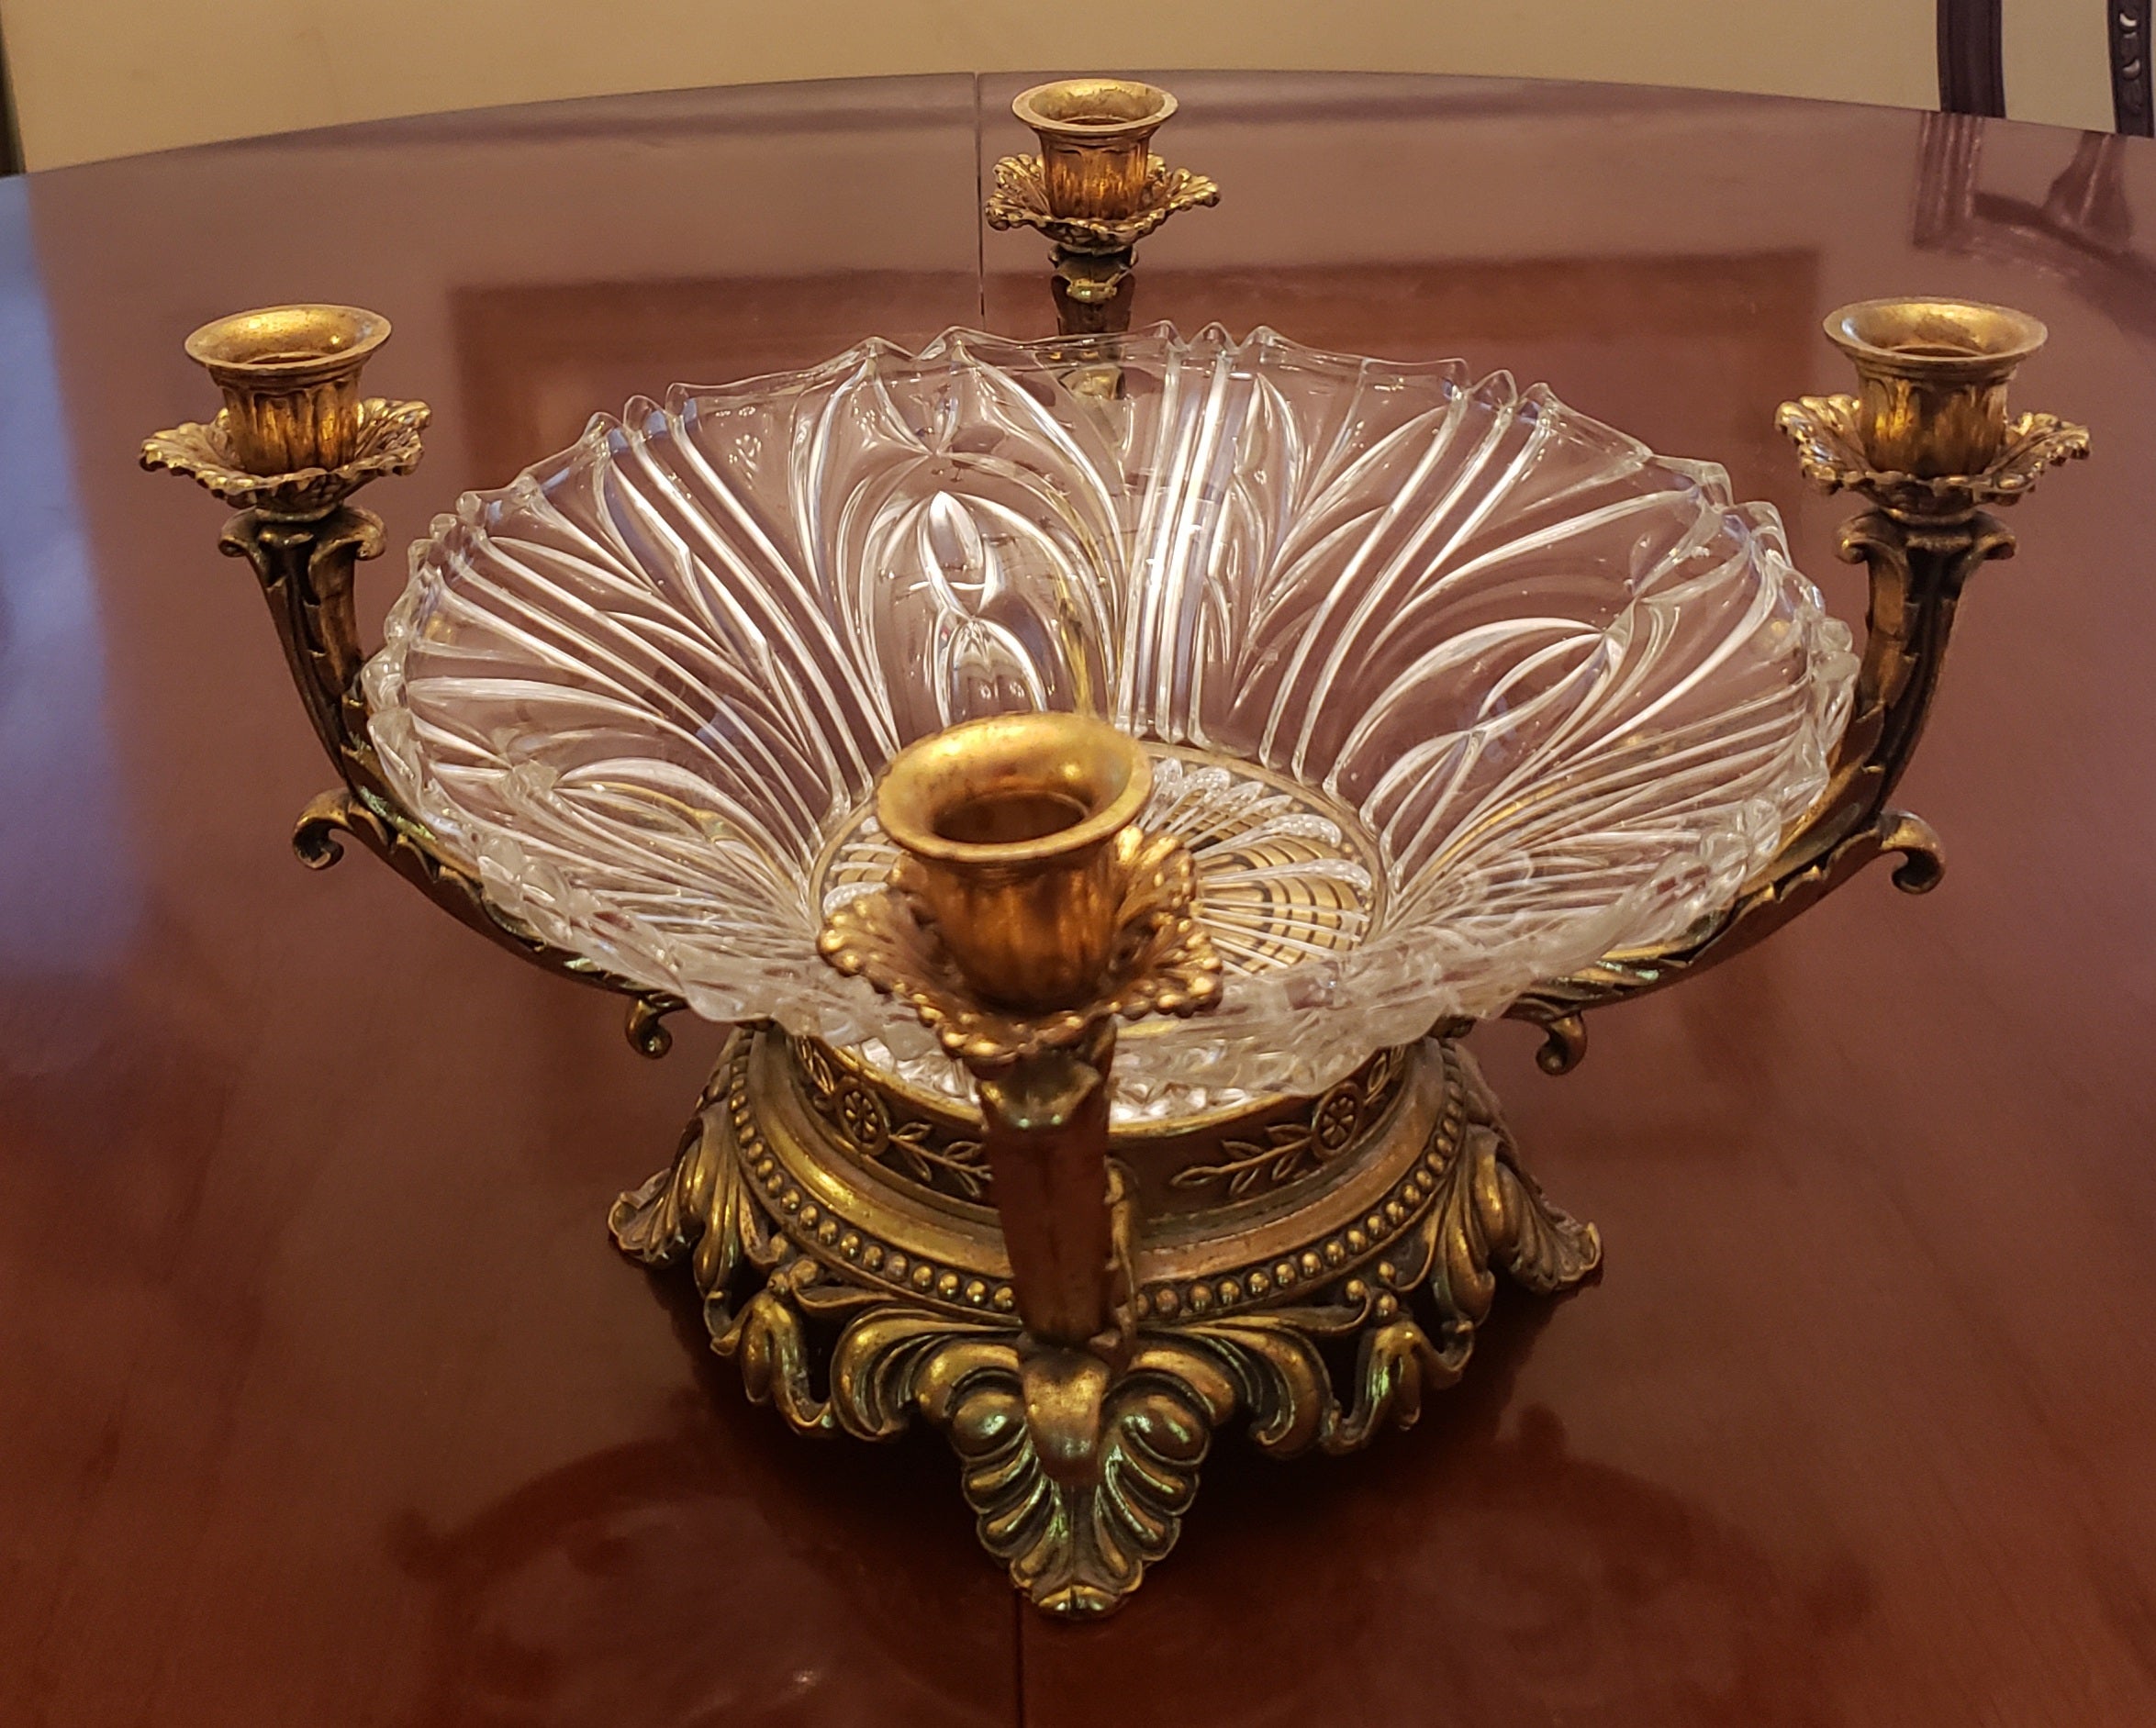 Amazing French 19th century Baccarat gilt bronze and cut crystal glass centerpiece candelabra 
Très bon état ancien
Mesure 15 